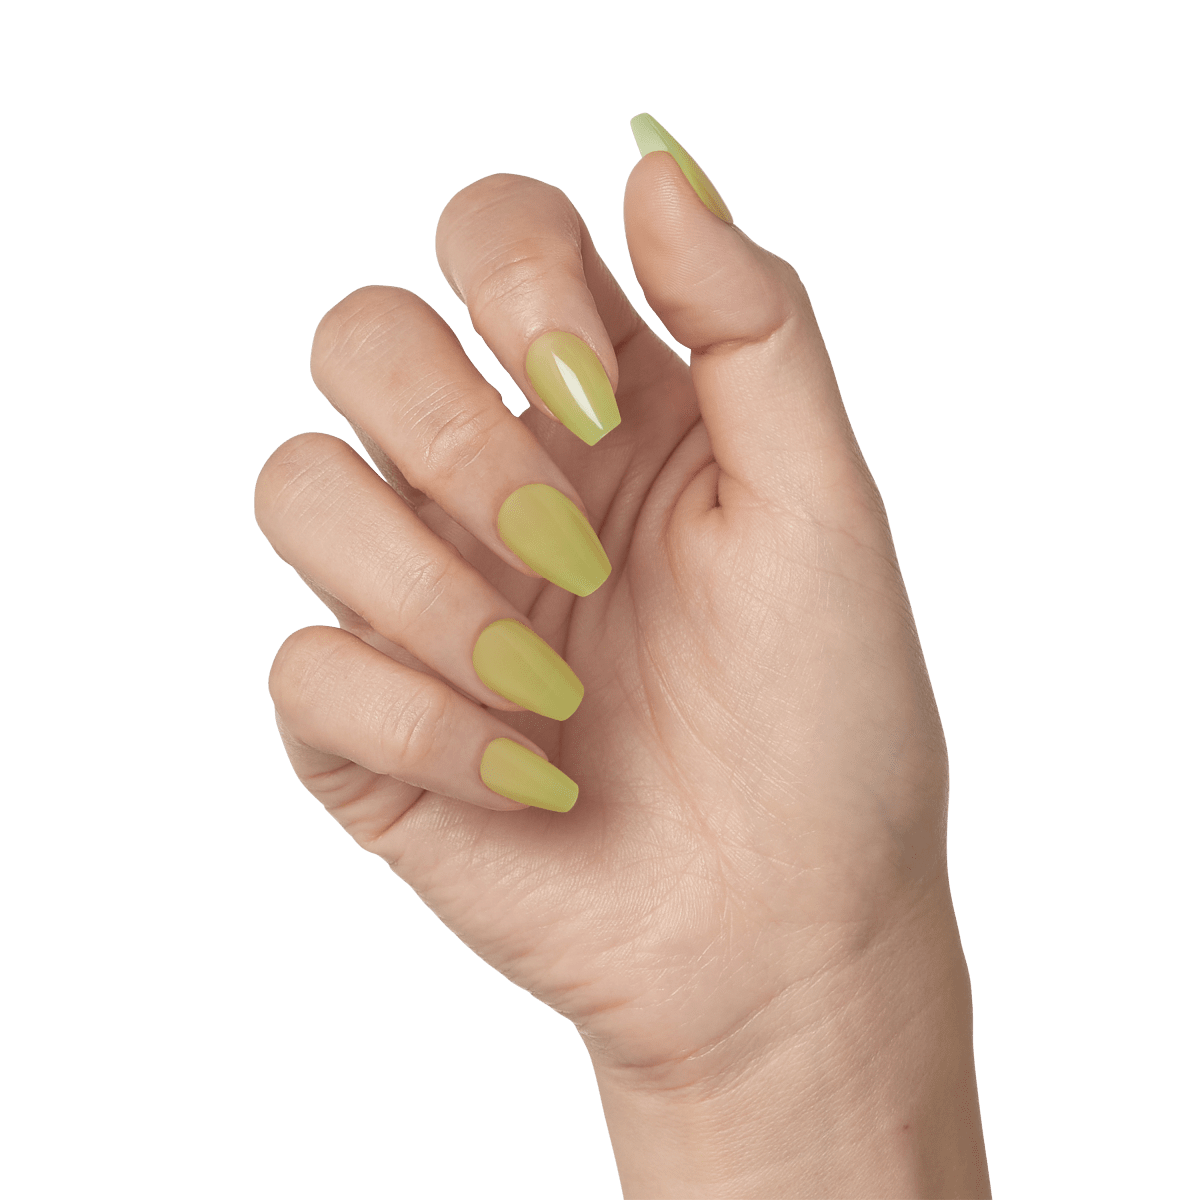 KISS imPRESS Color FX Press-On Nails, No Glue Needed, Green, Short Square,  33 Ct.